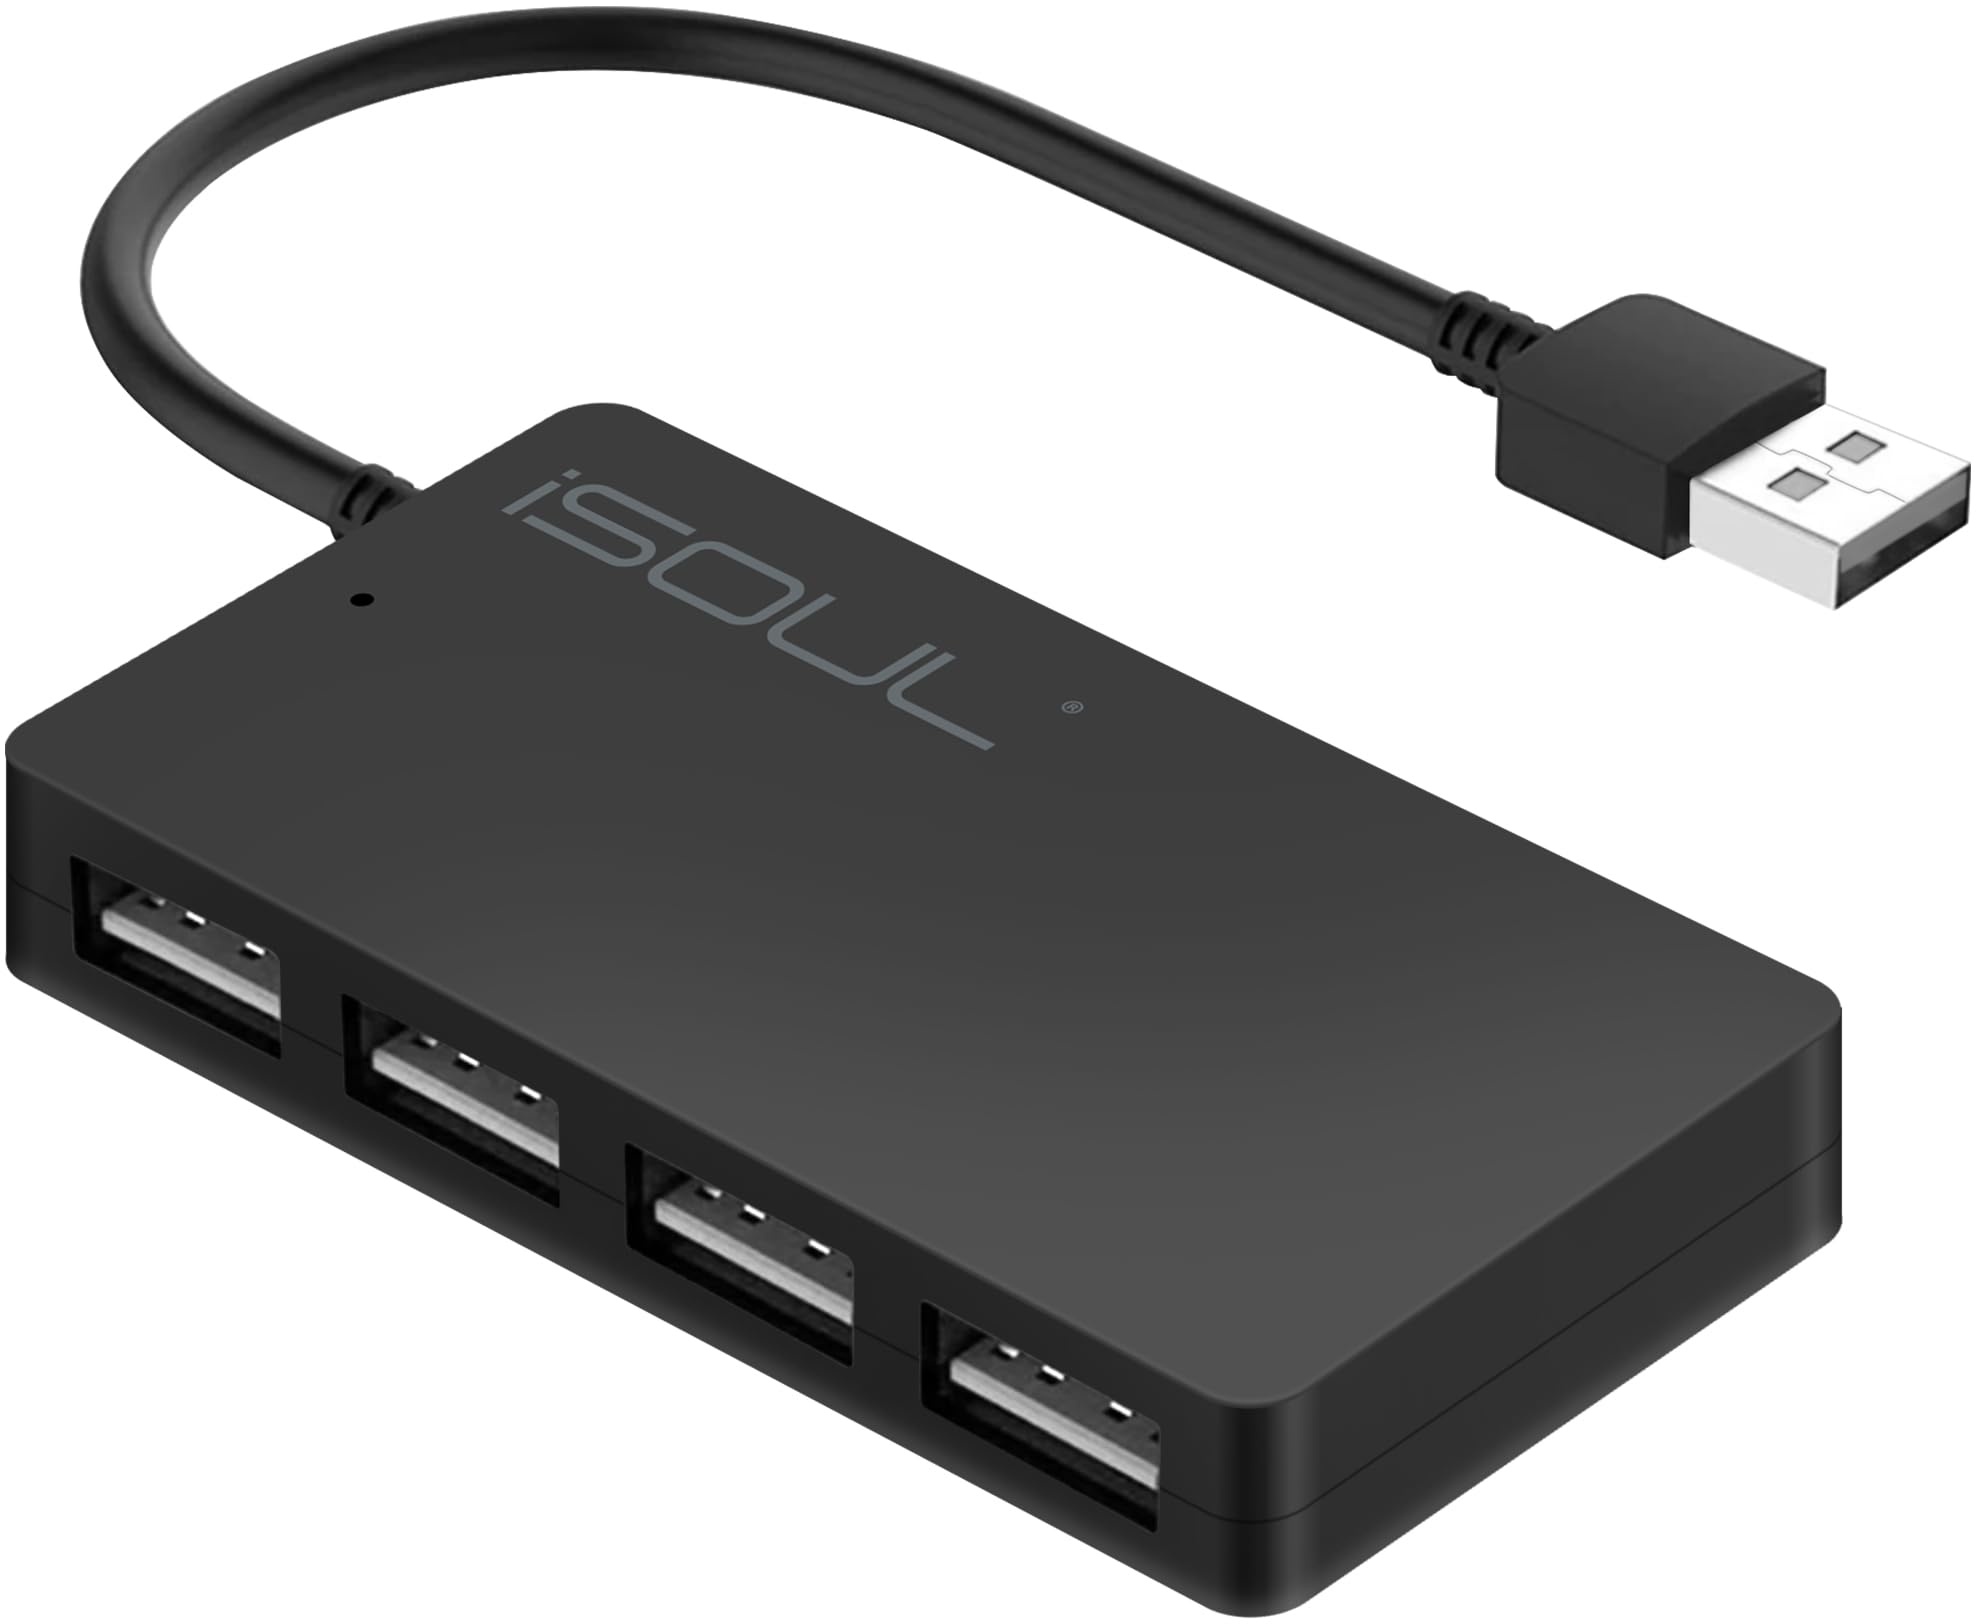 USB Hub, Ultra Slim Extra Leicht 4 Port USB 2.0 Hub, iSOUL Datenhub für MacBook, MacBook Air/Pro/Mini, iMac, MacPro, Windows Laptops und Ultrabooks, sowie PCs und mehr (Schwarz)